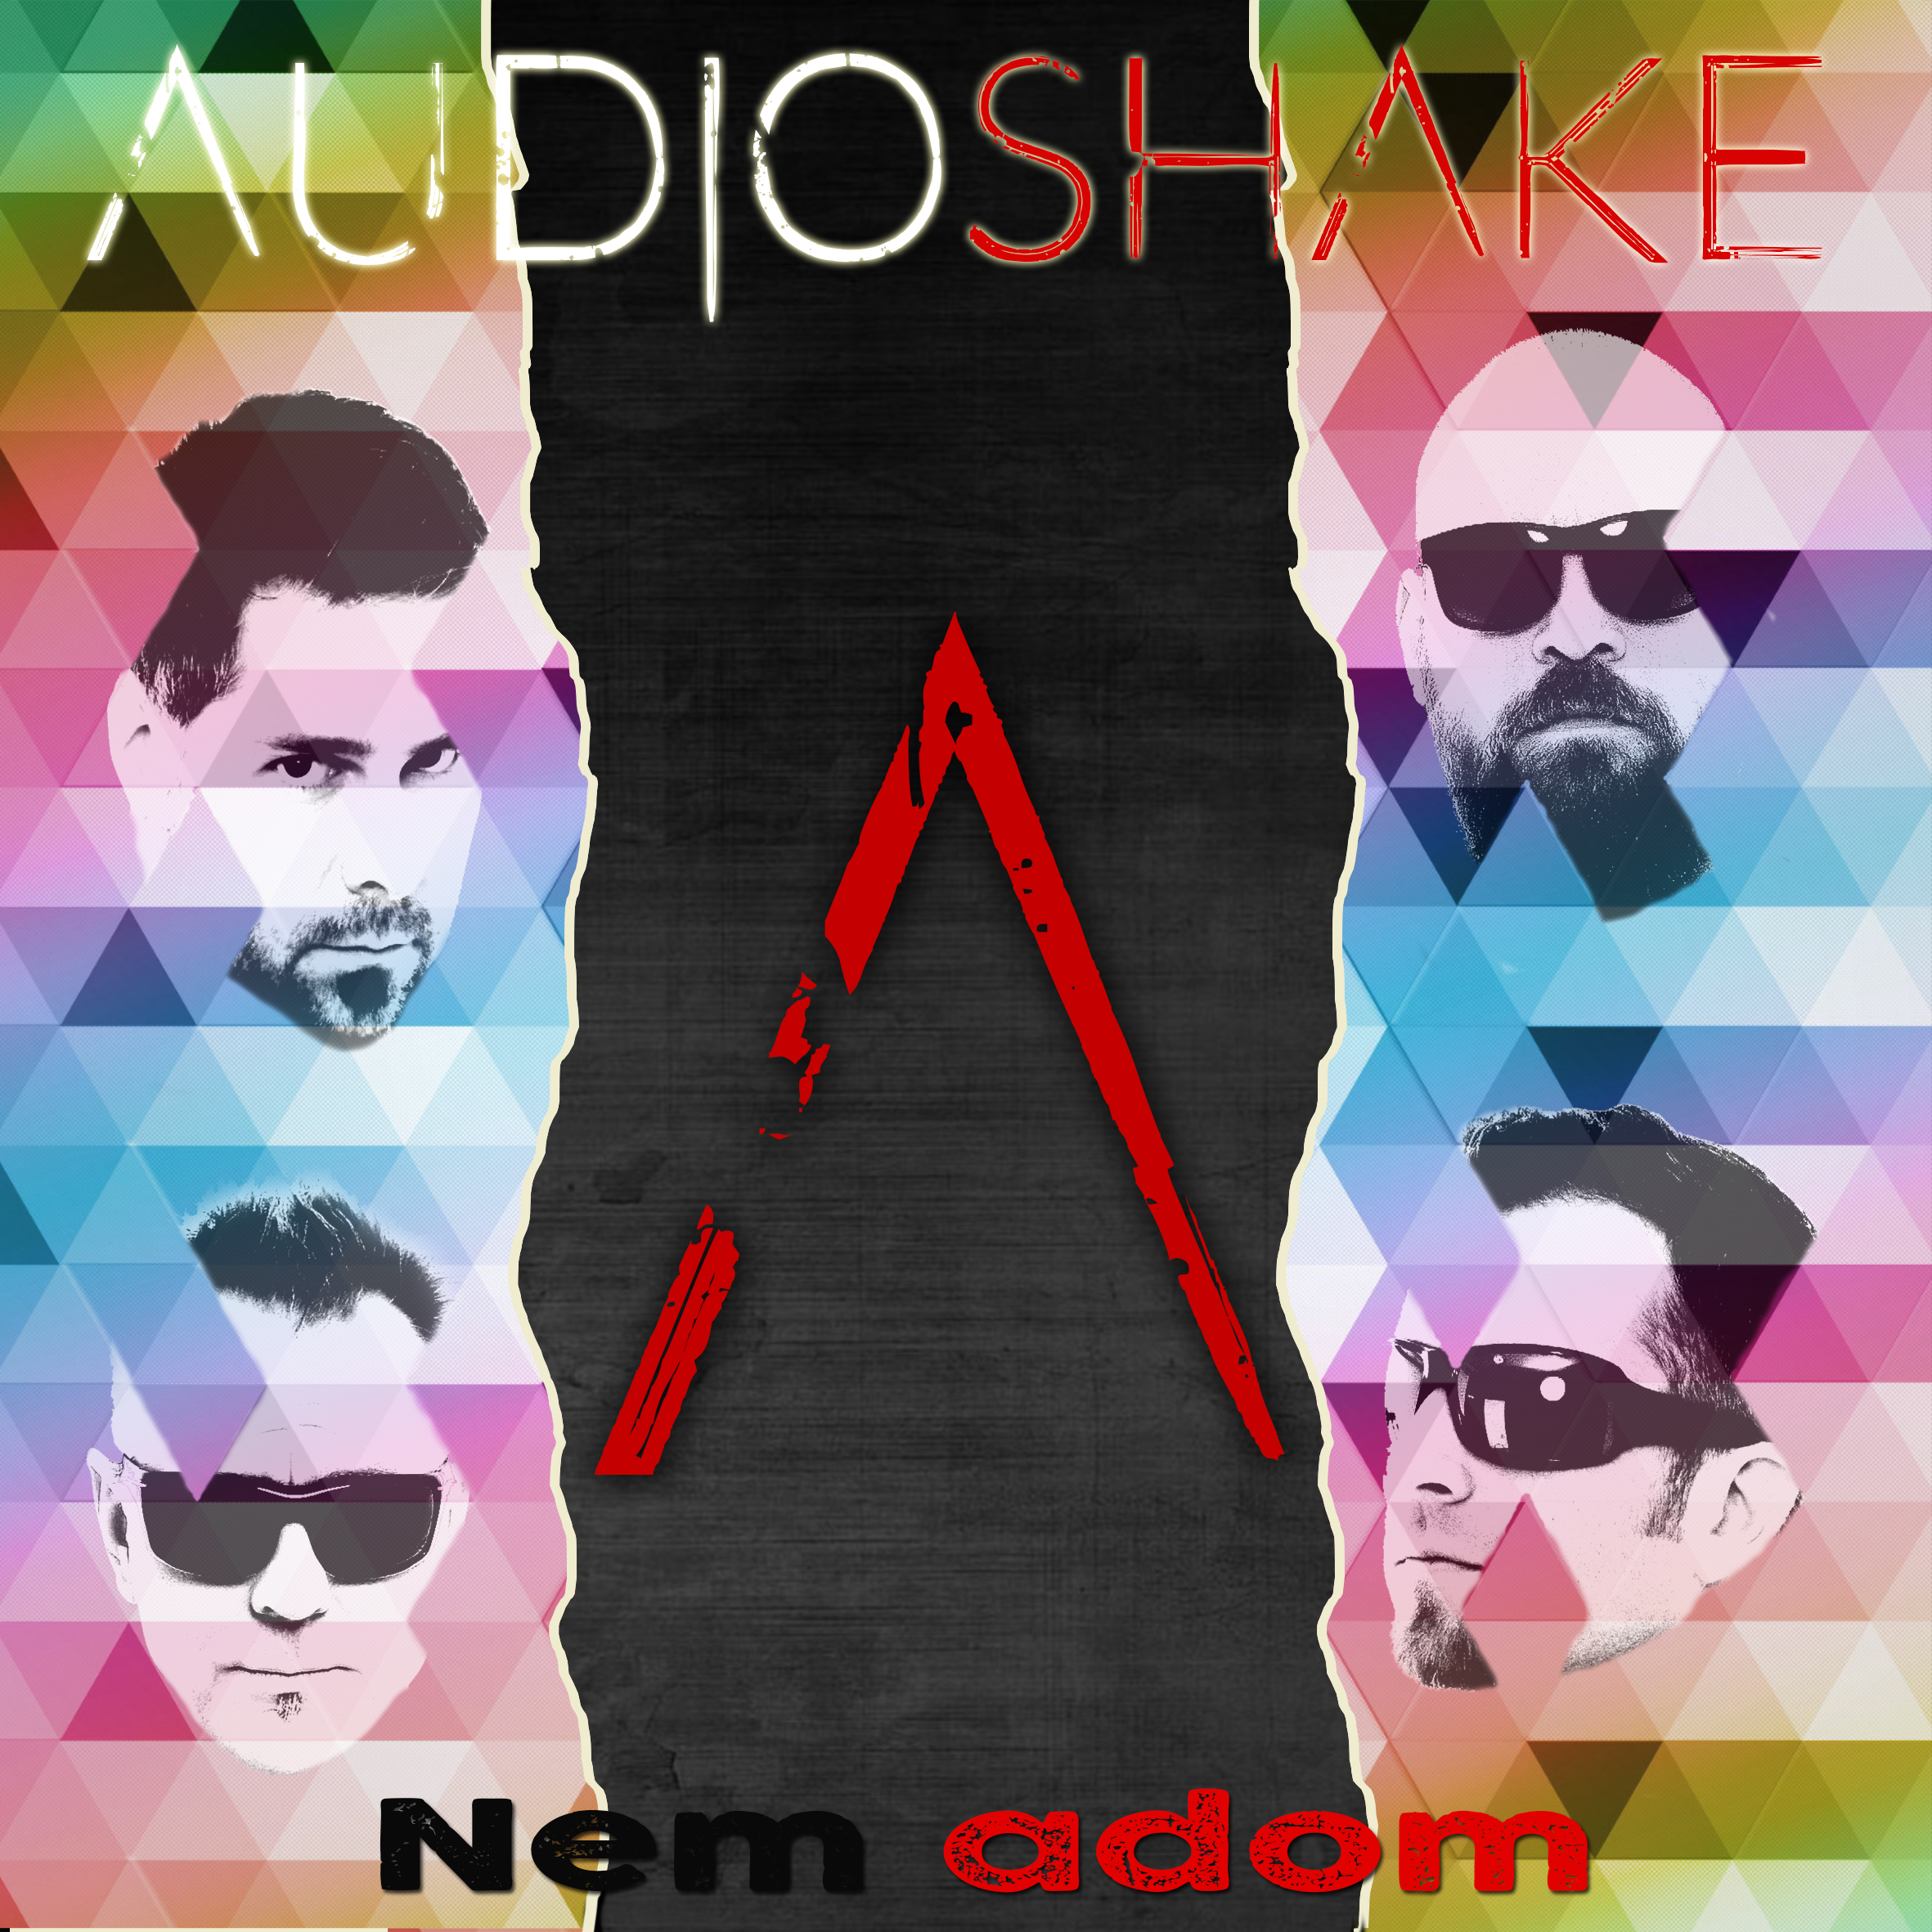 Audioshake Nem adom